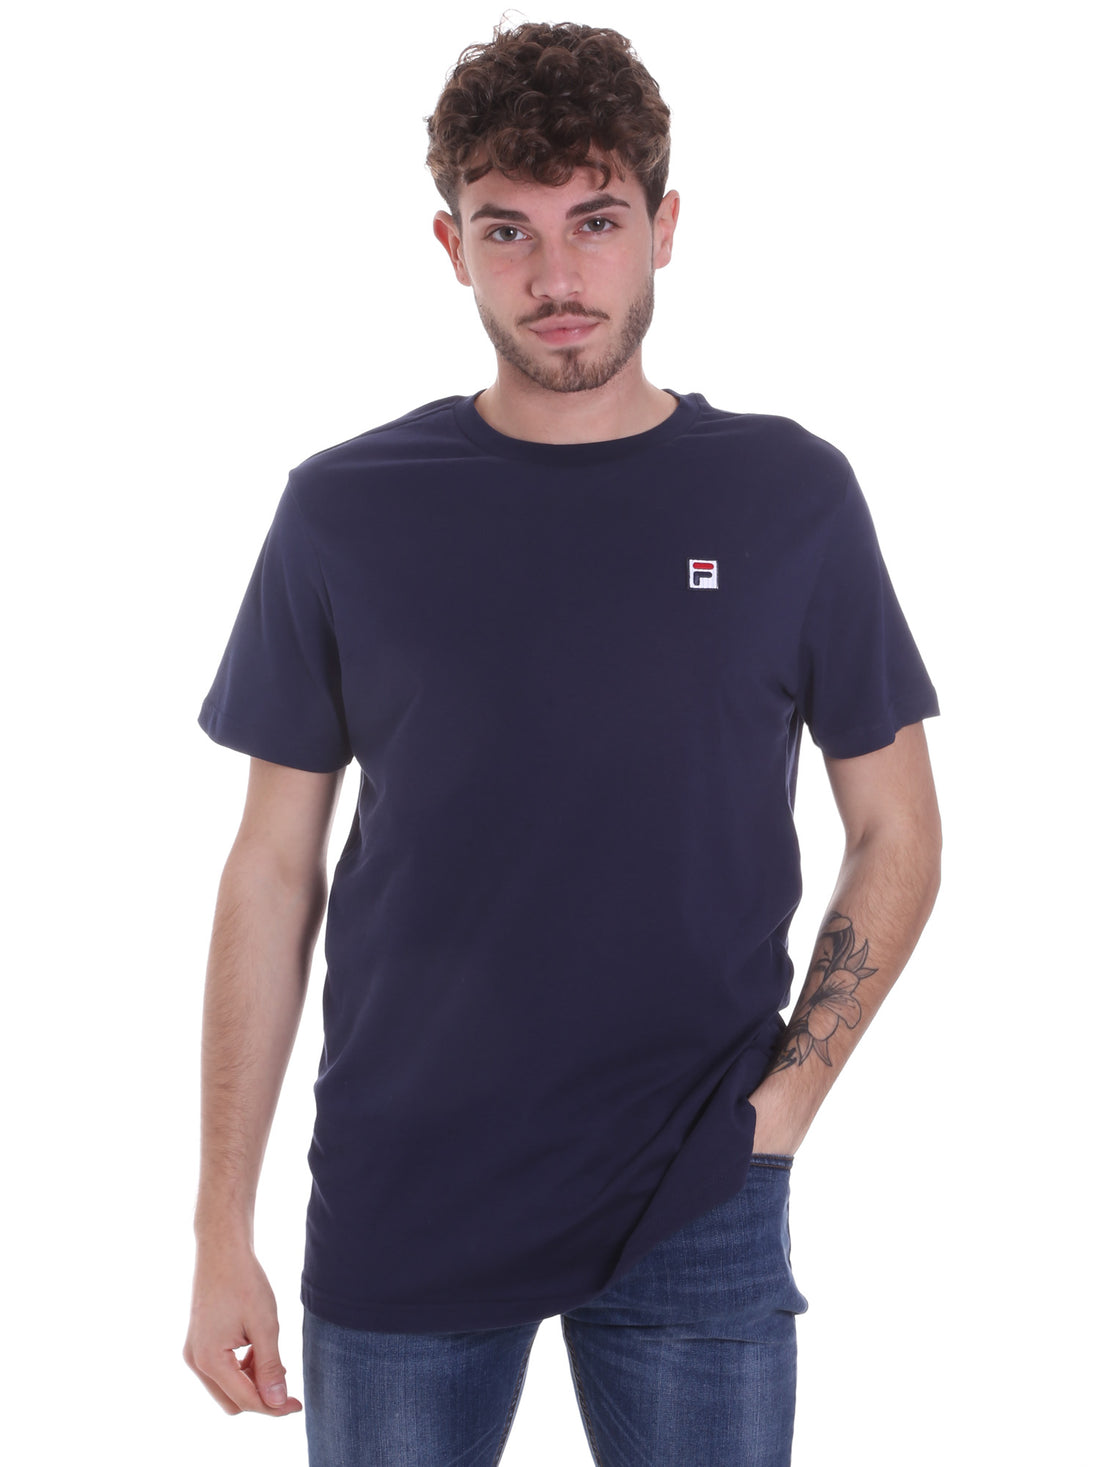 T-shirt Blu Fila